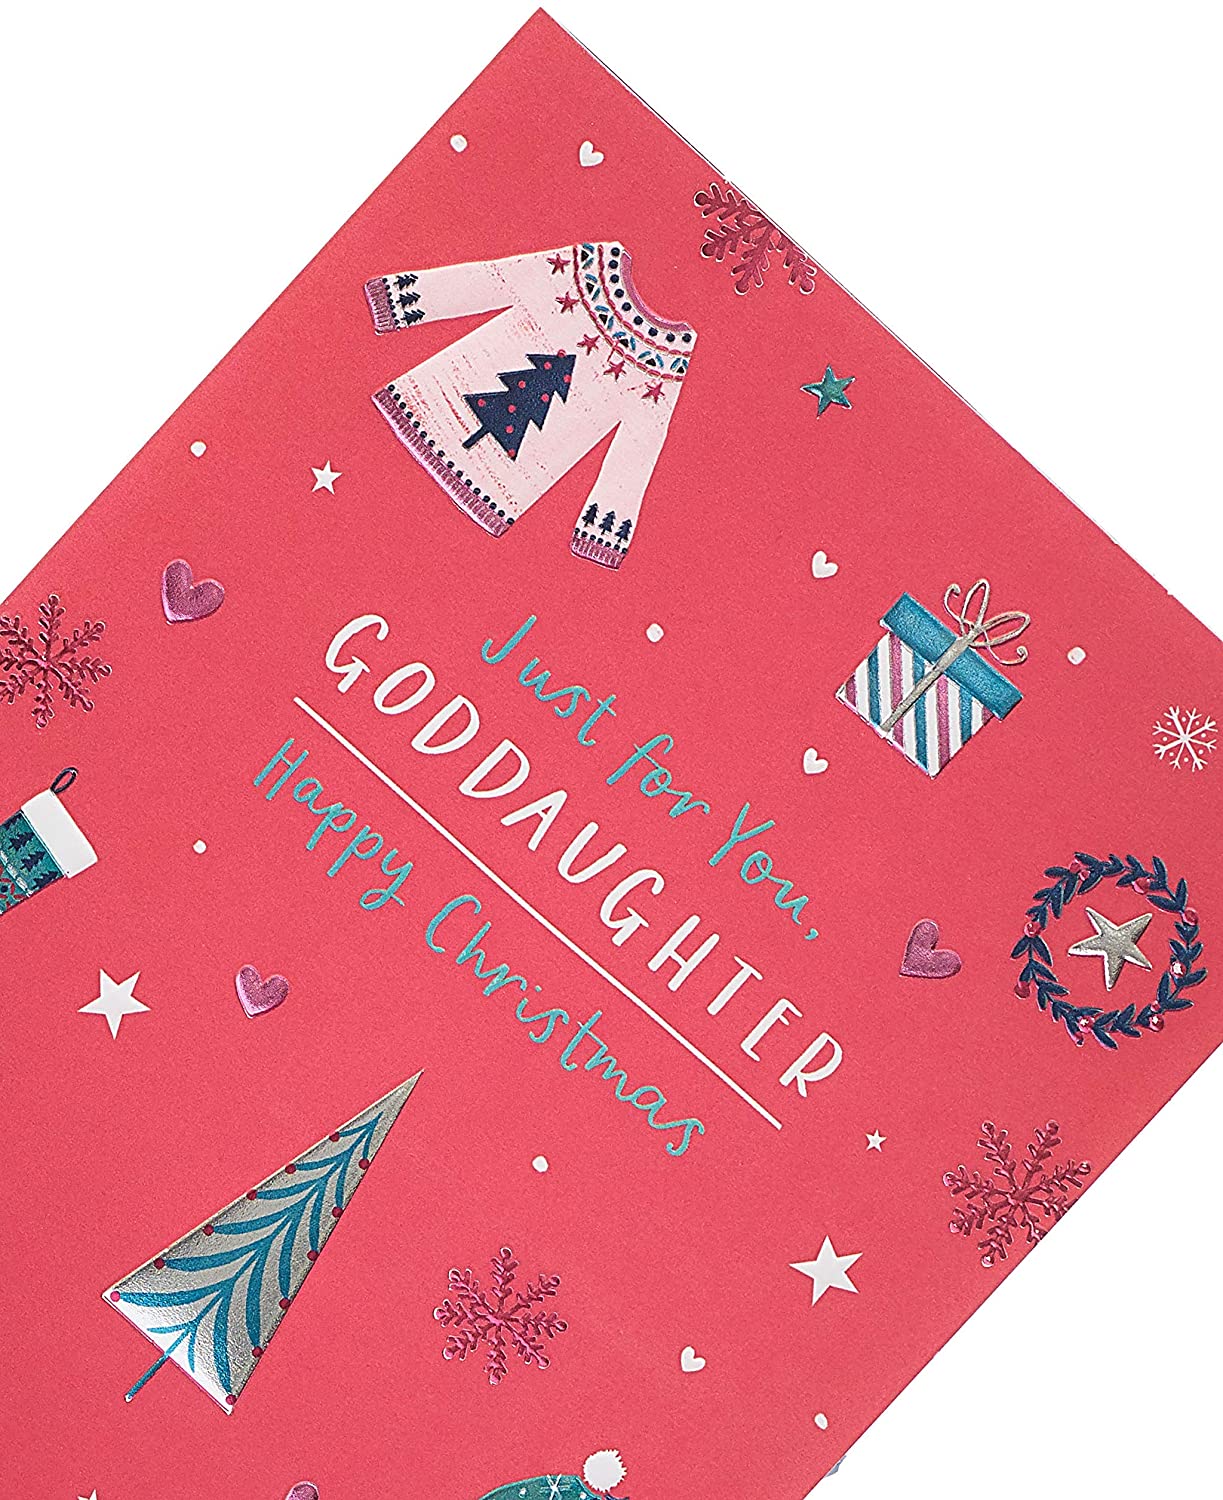 Goddaughter Christmas Card Cute Christmas Jumper Design